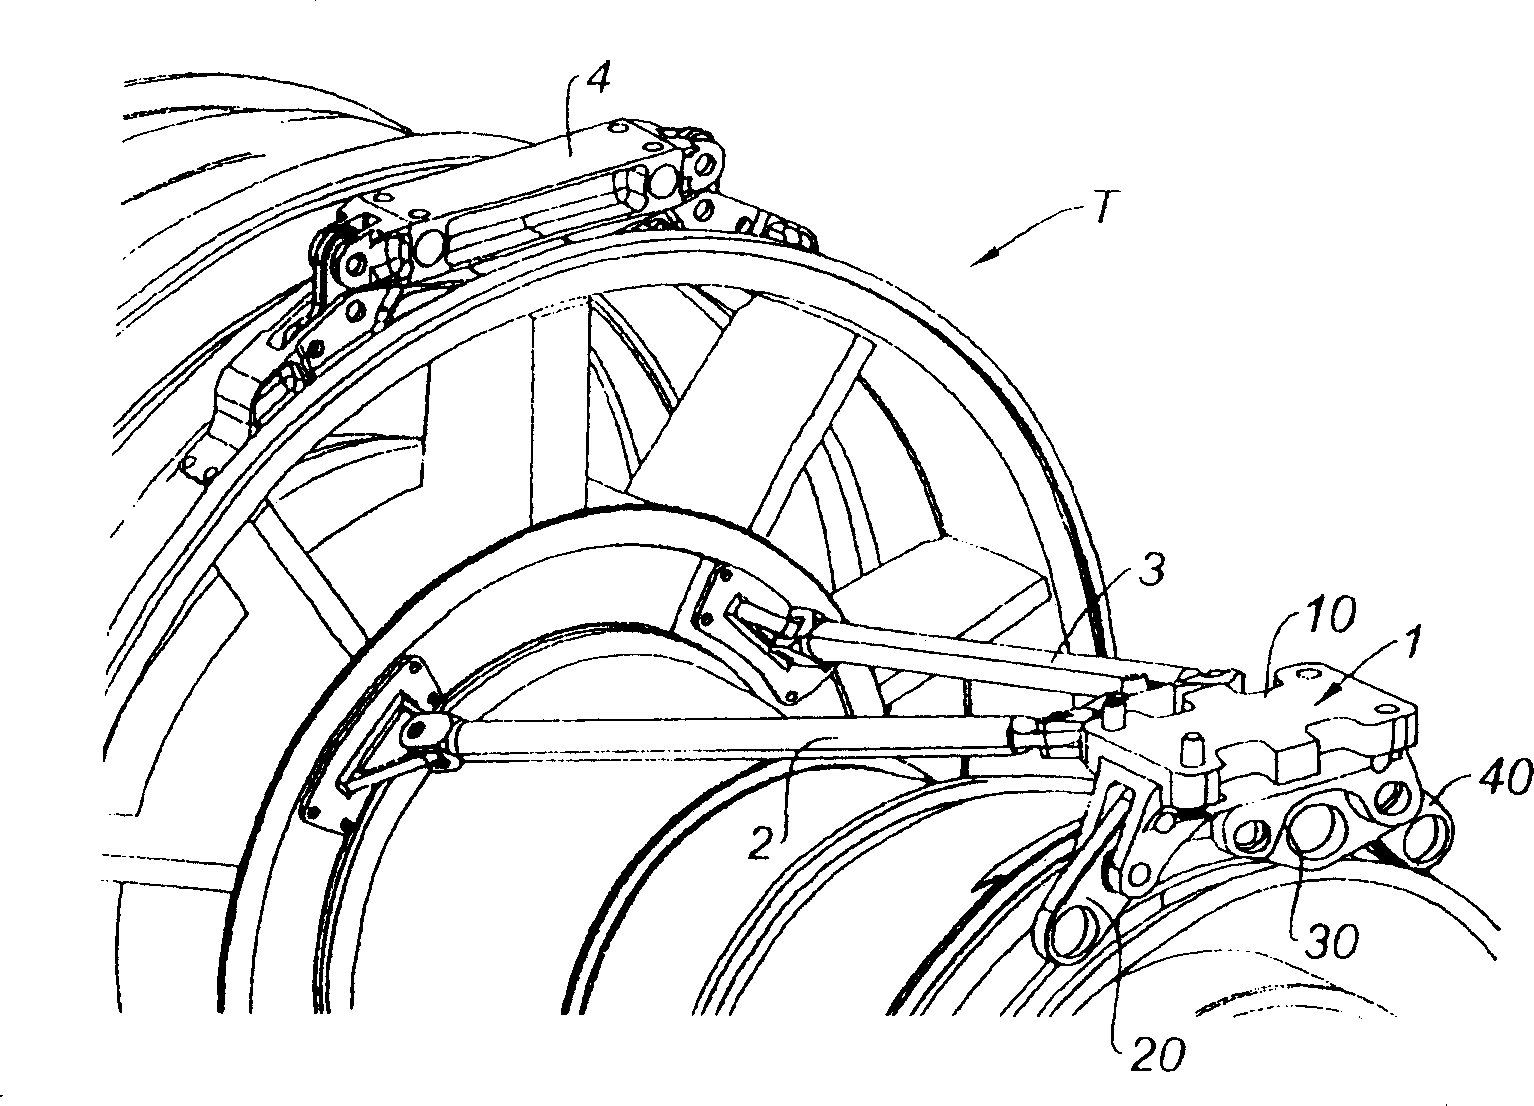 Rear suspension for turbojet engine